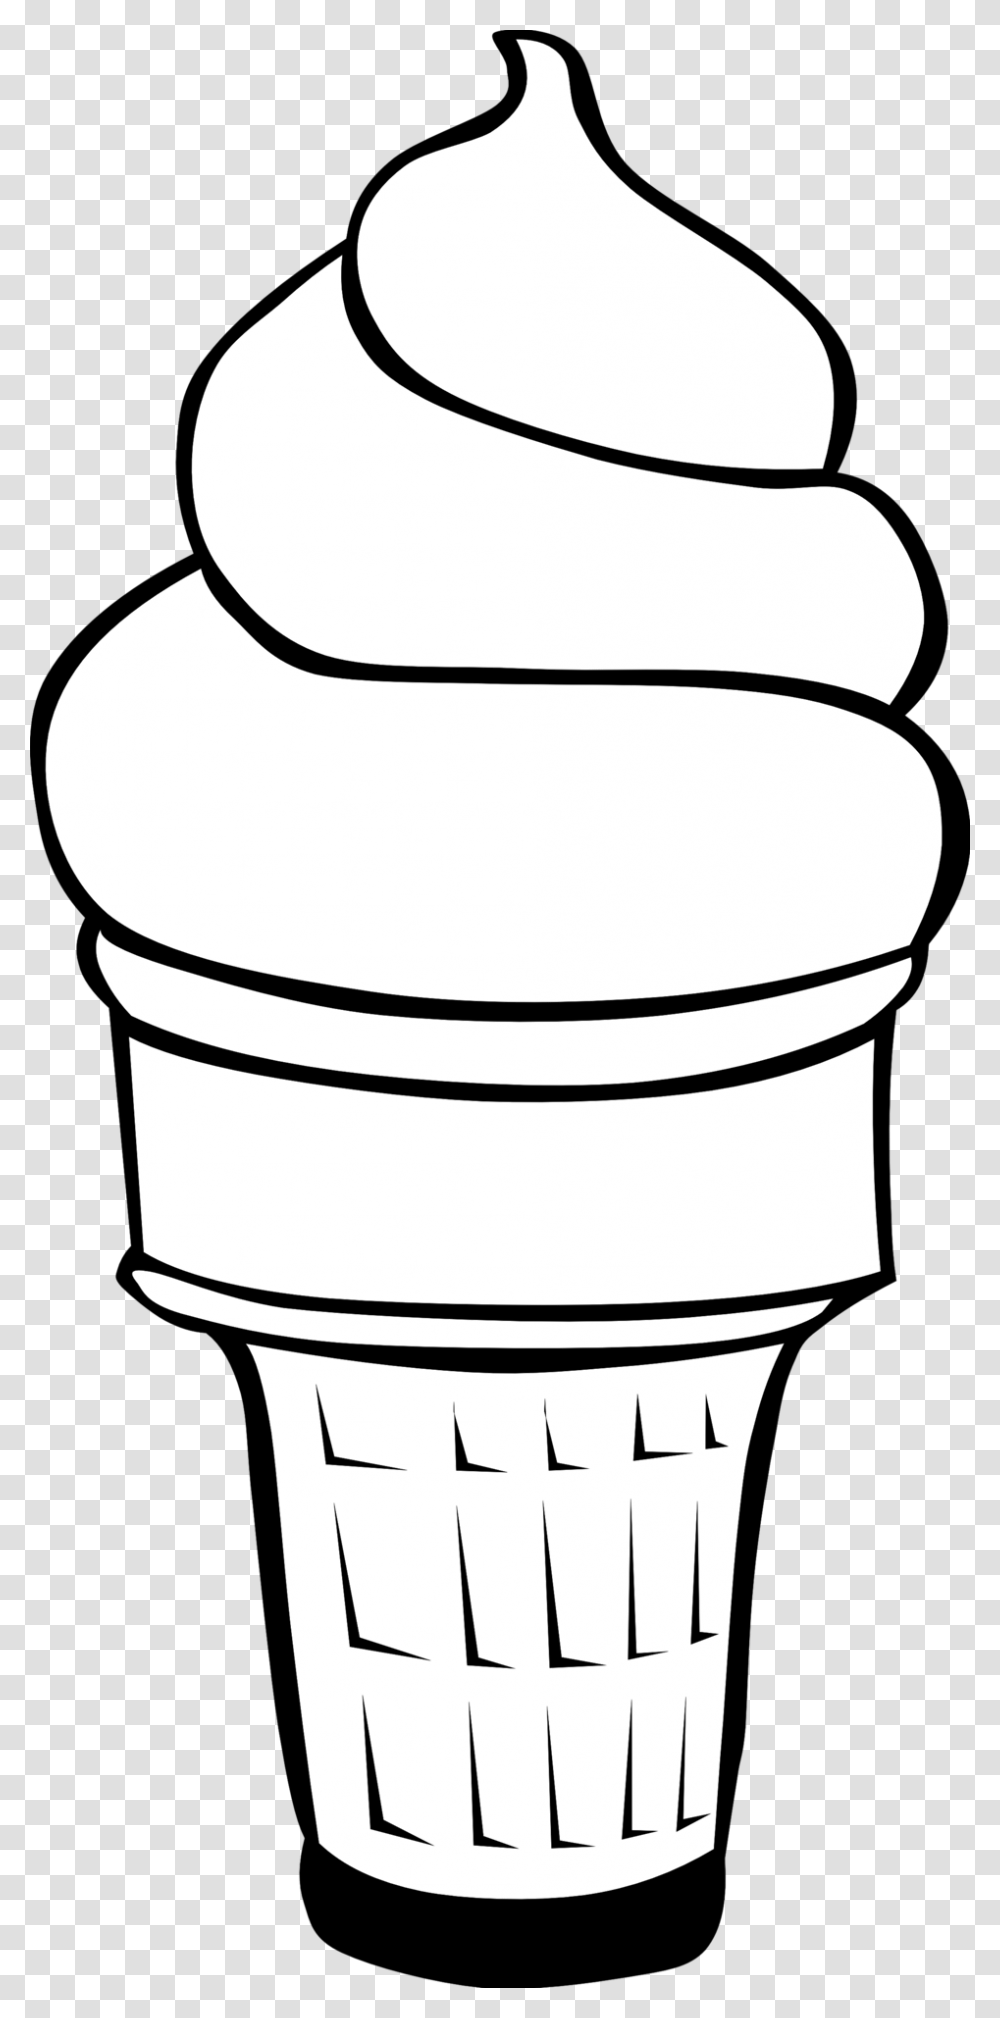 Fast Food Desserts Ice Cream Cones Soft Serve Graphics, Light, Lamp, Wedding Cake, Lightbulb Transparent Png